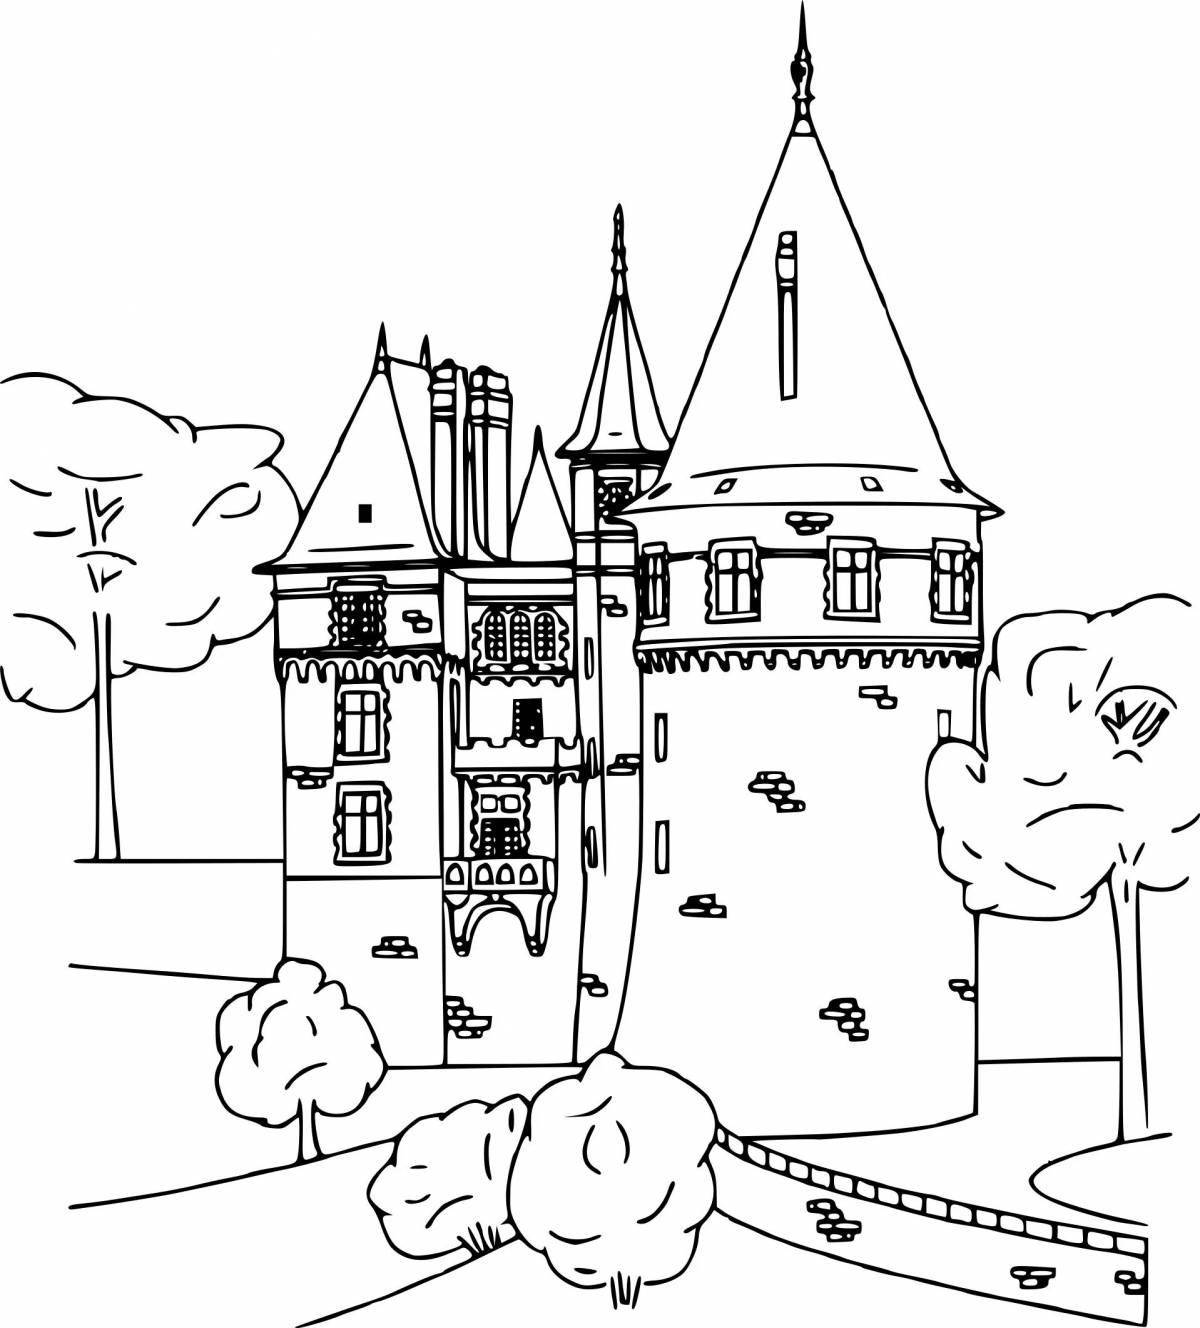 Coloring book grandiose fairytale castle